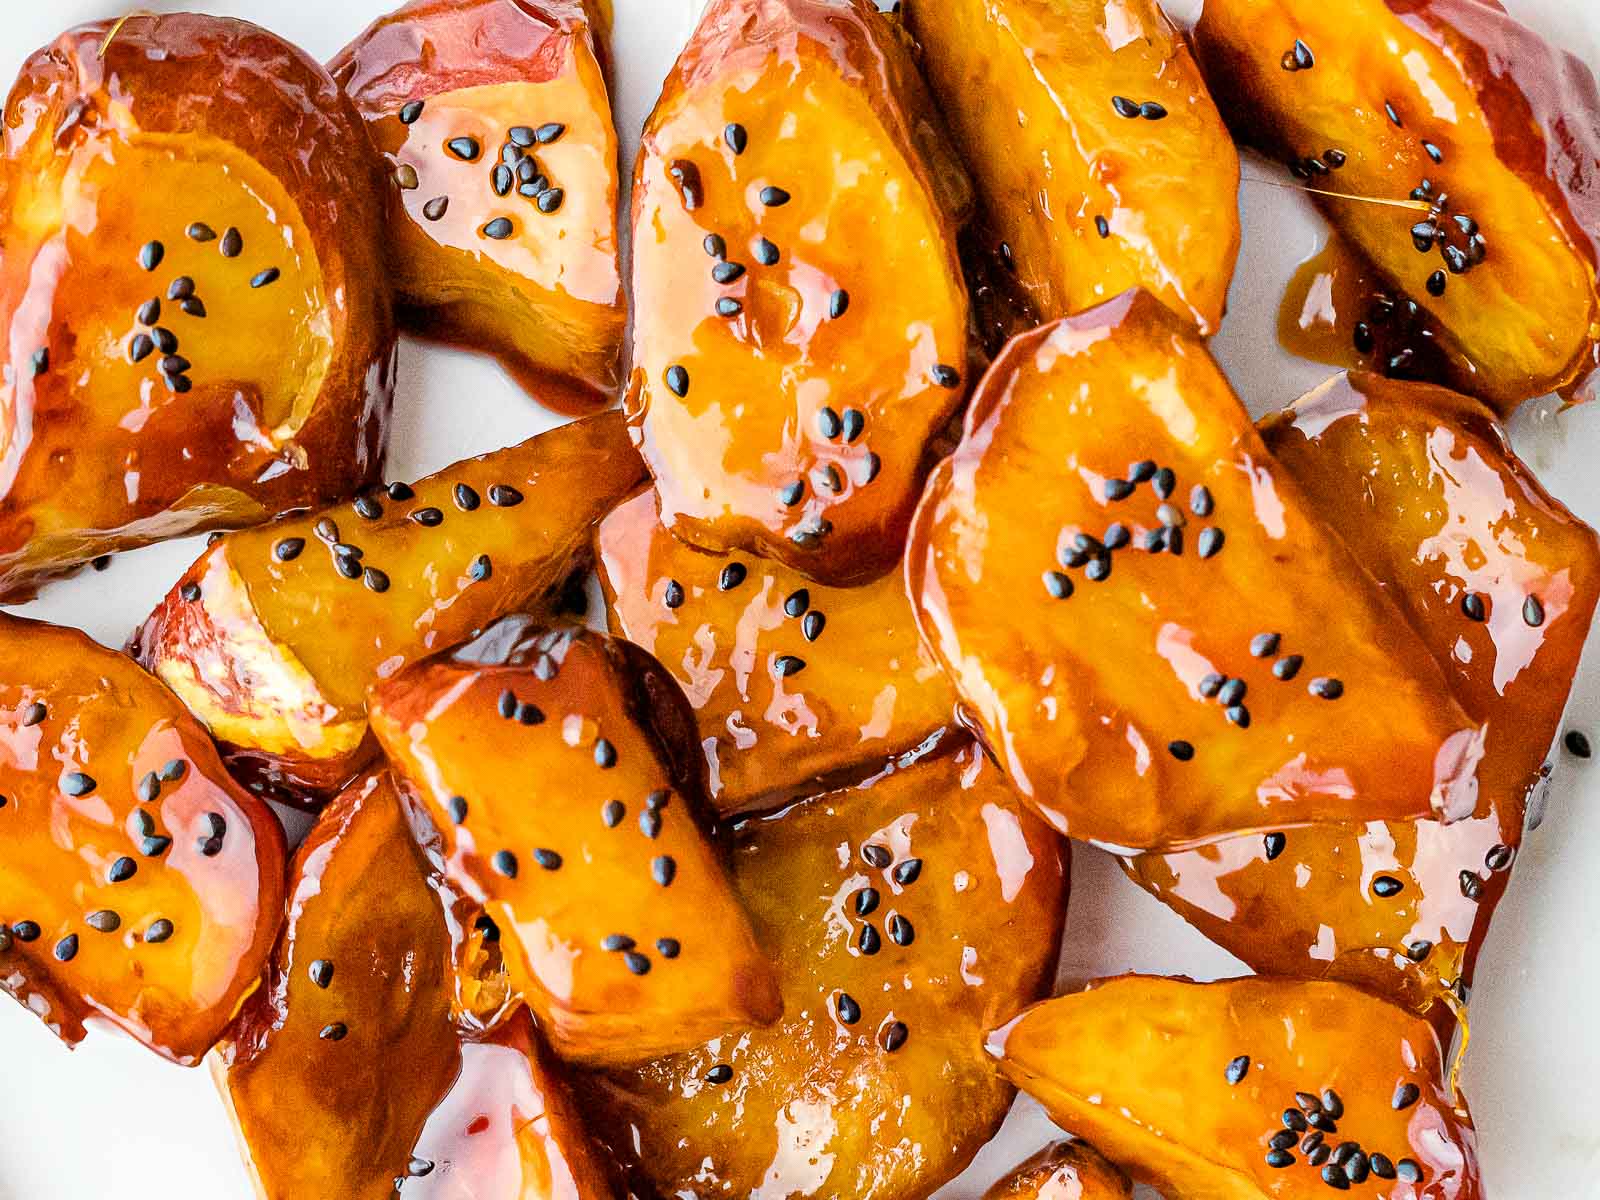 Korean caramelized sweet potatoes garnished with black sesame seeds